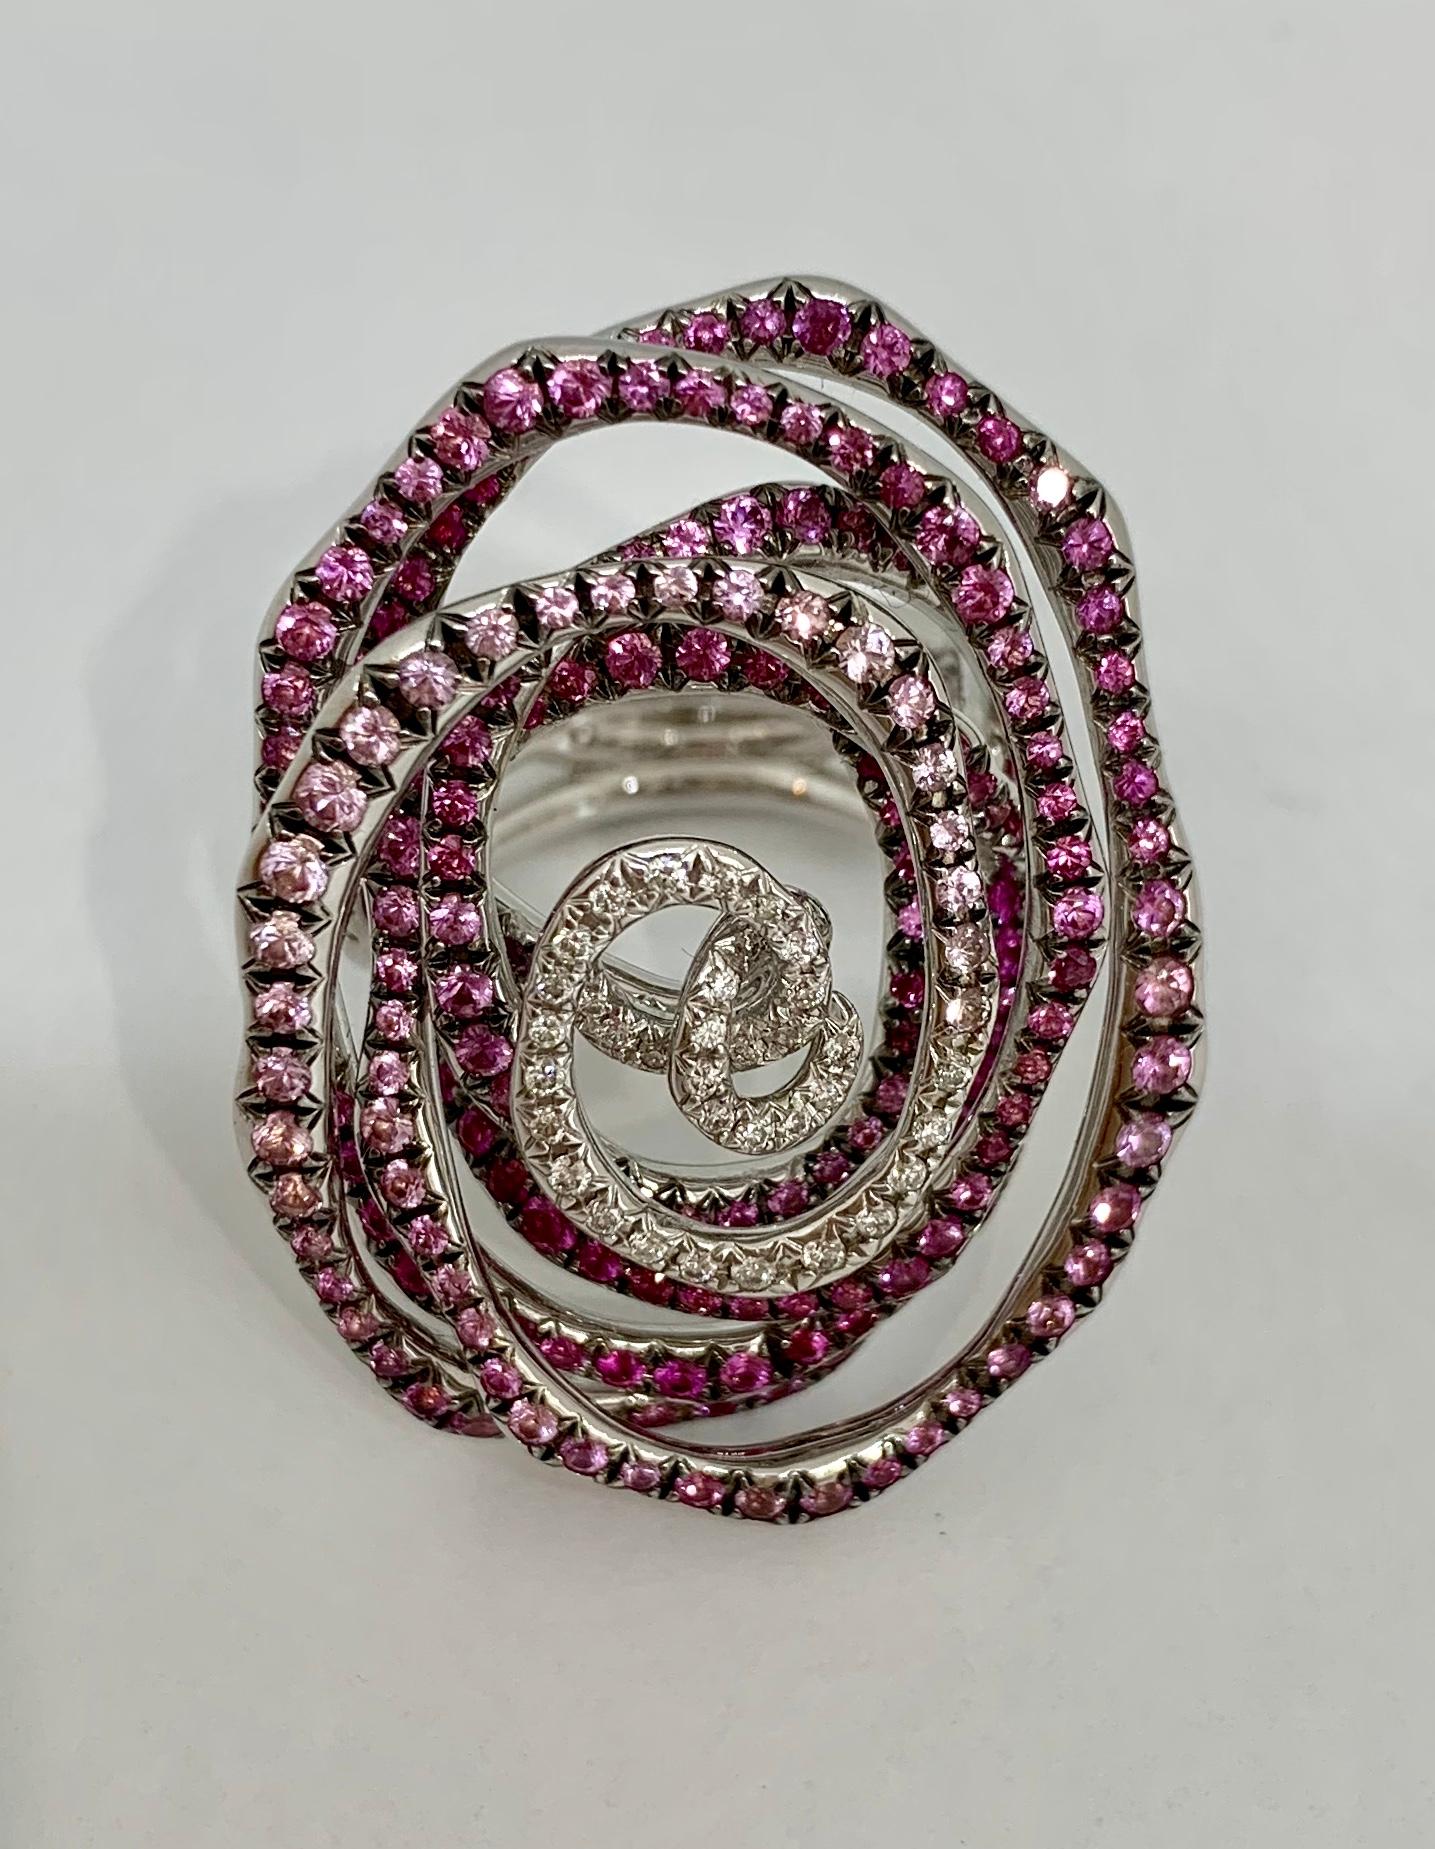 Margot McKinney 18K Gold Swirl Ring Set with White Diamonds and Pink Sapphires 1